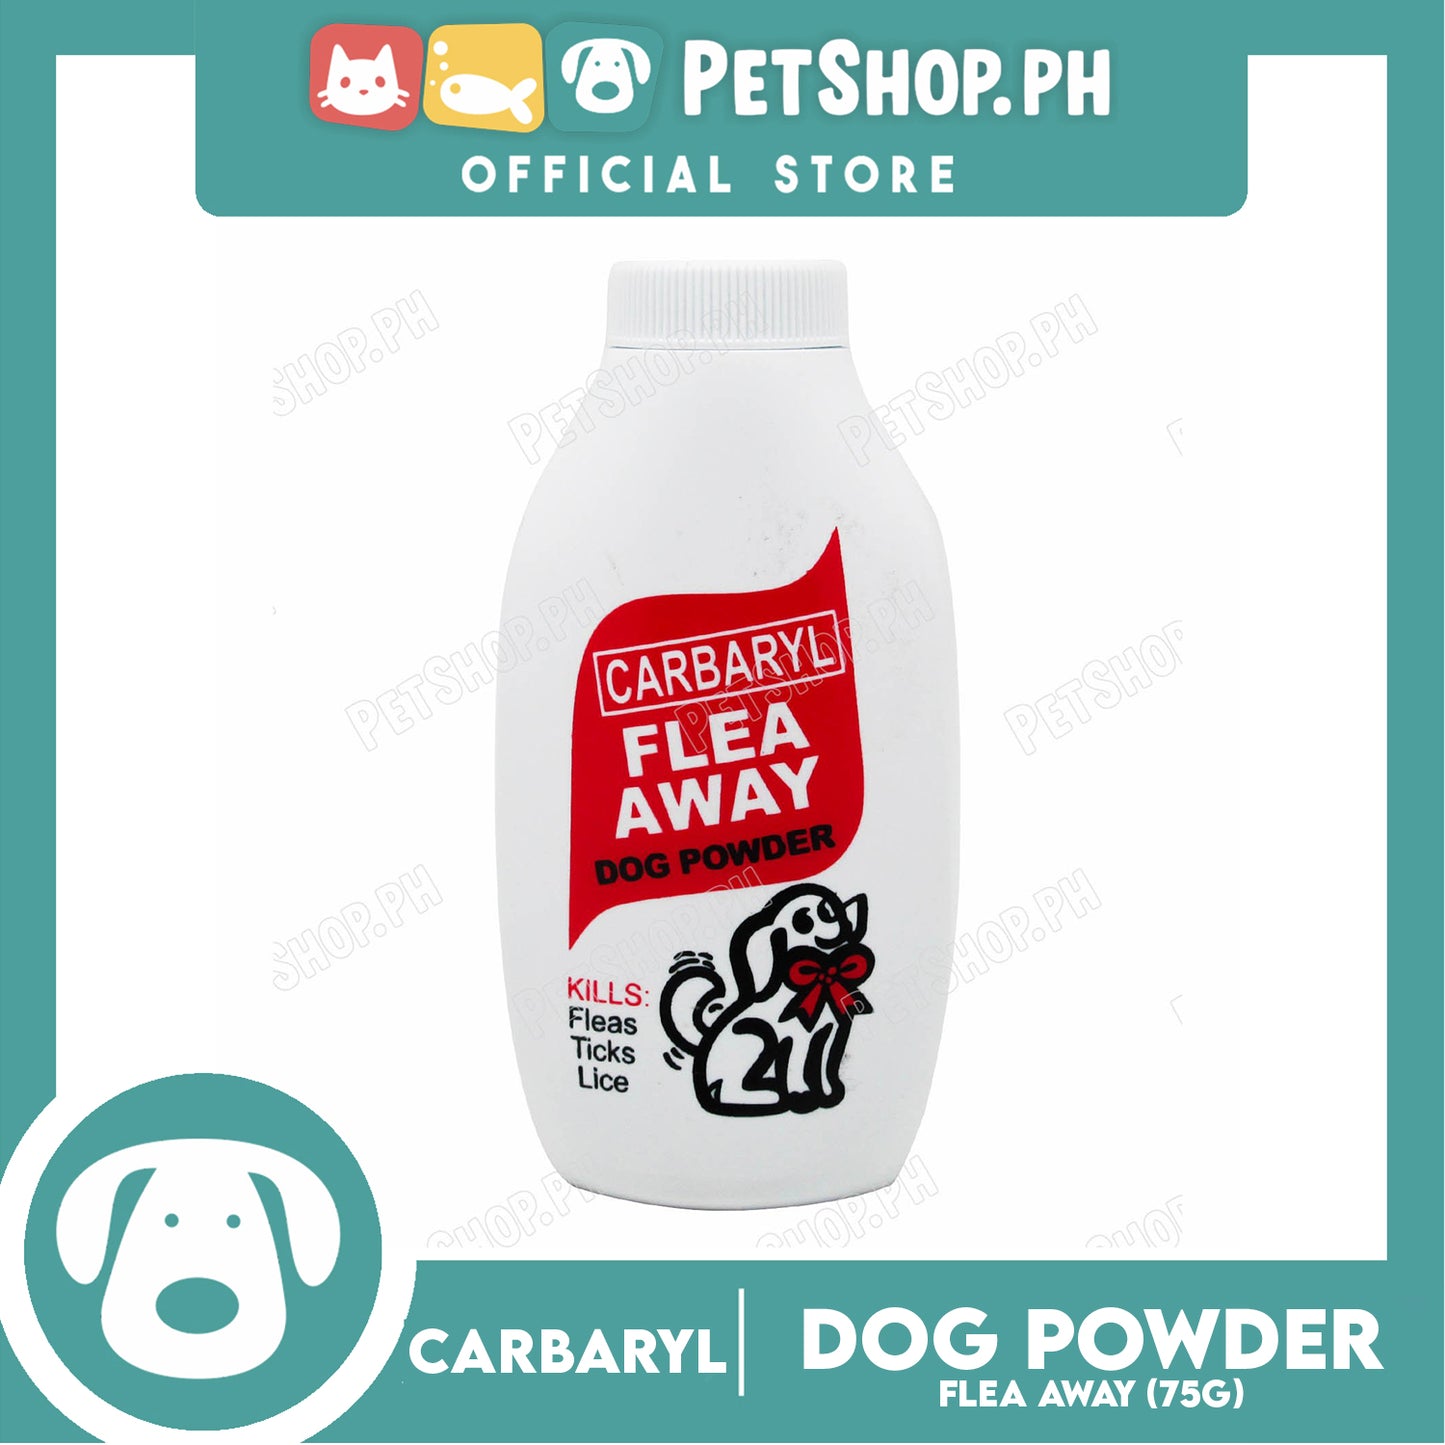 Cabaryl Flea Away Dog Powder